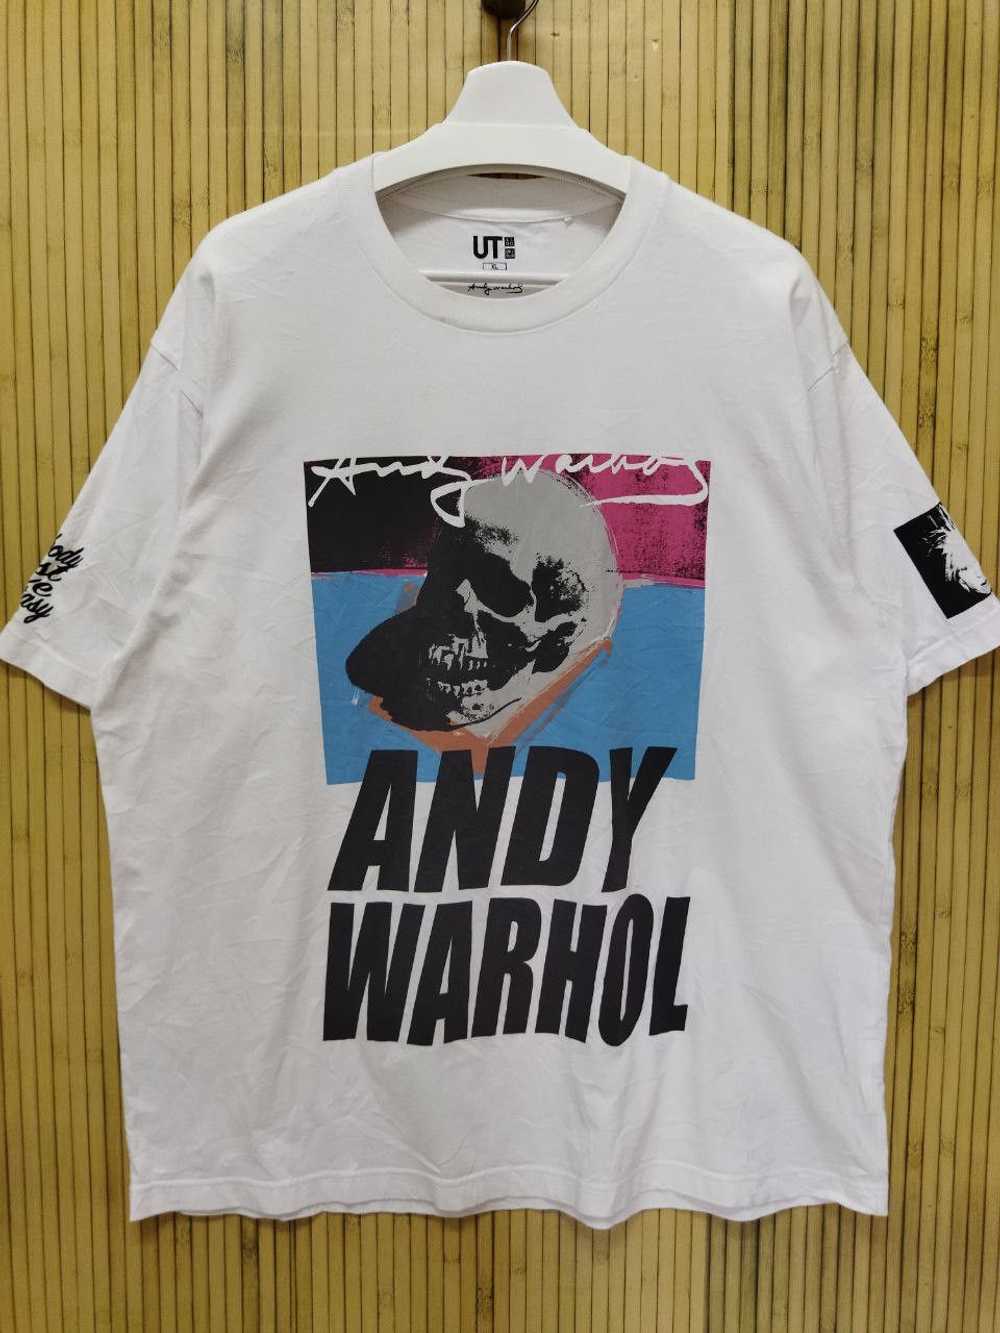 Andy Warhol × Rare × Uniqlo ANDY WARHOL x UNIQLO - image 8